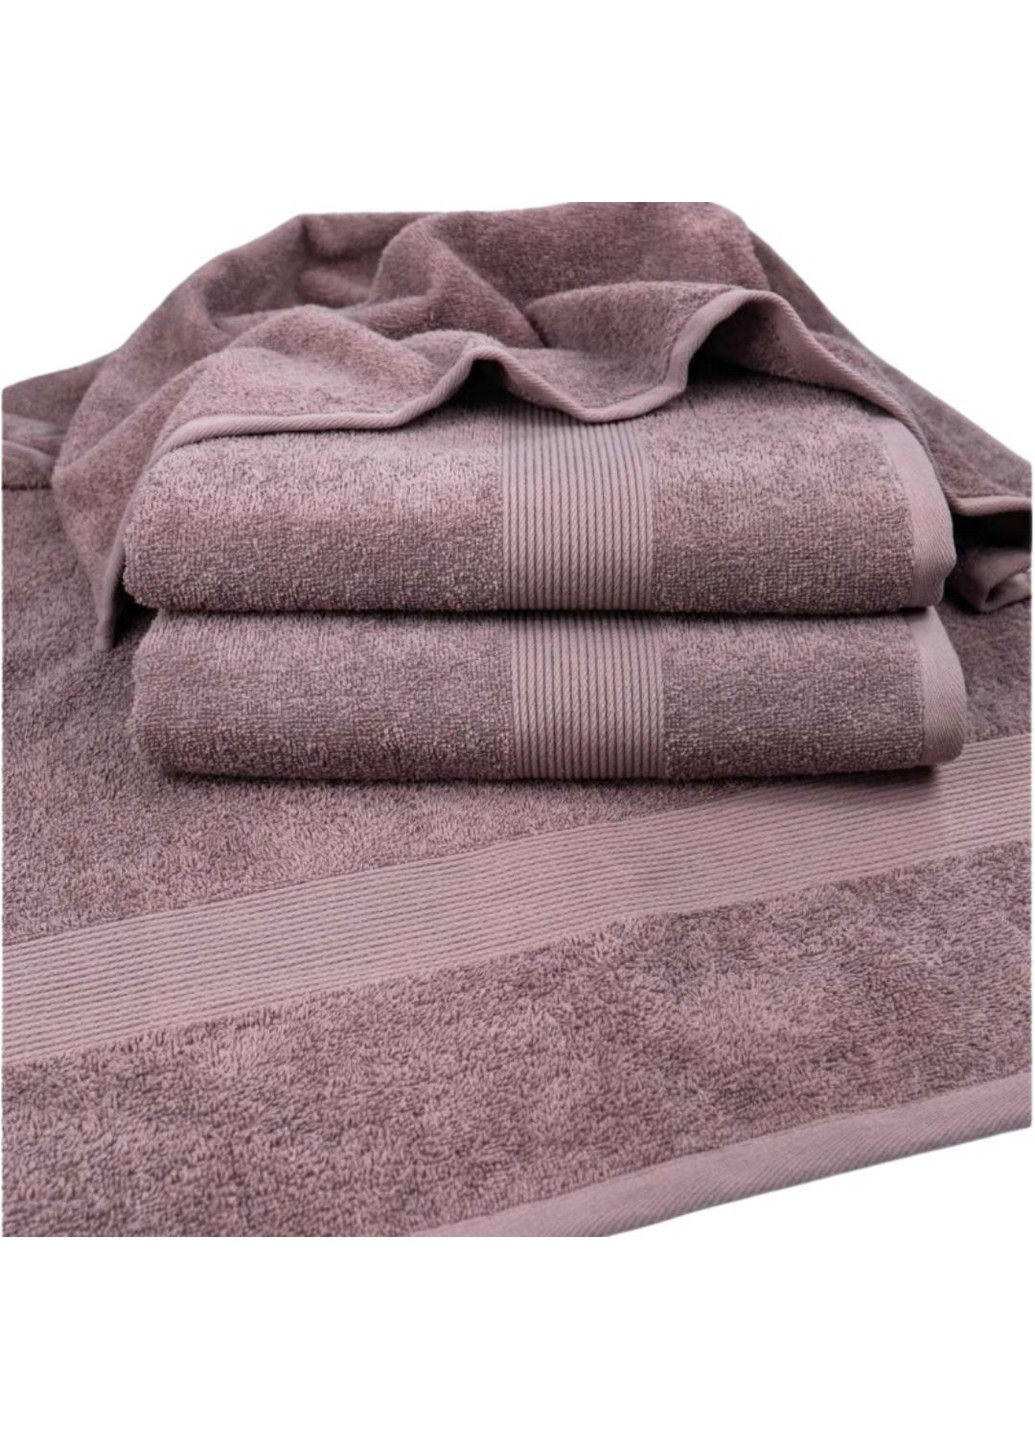 GM Textile полотенце махровое с бордюром, 70*140 см темно-коричневый производство - Узбекистан